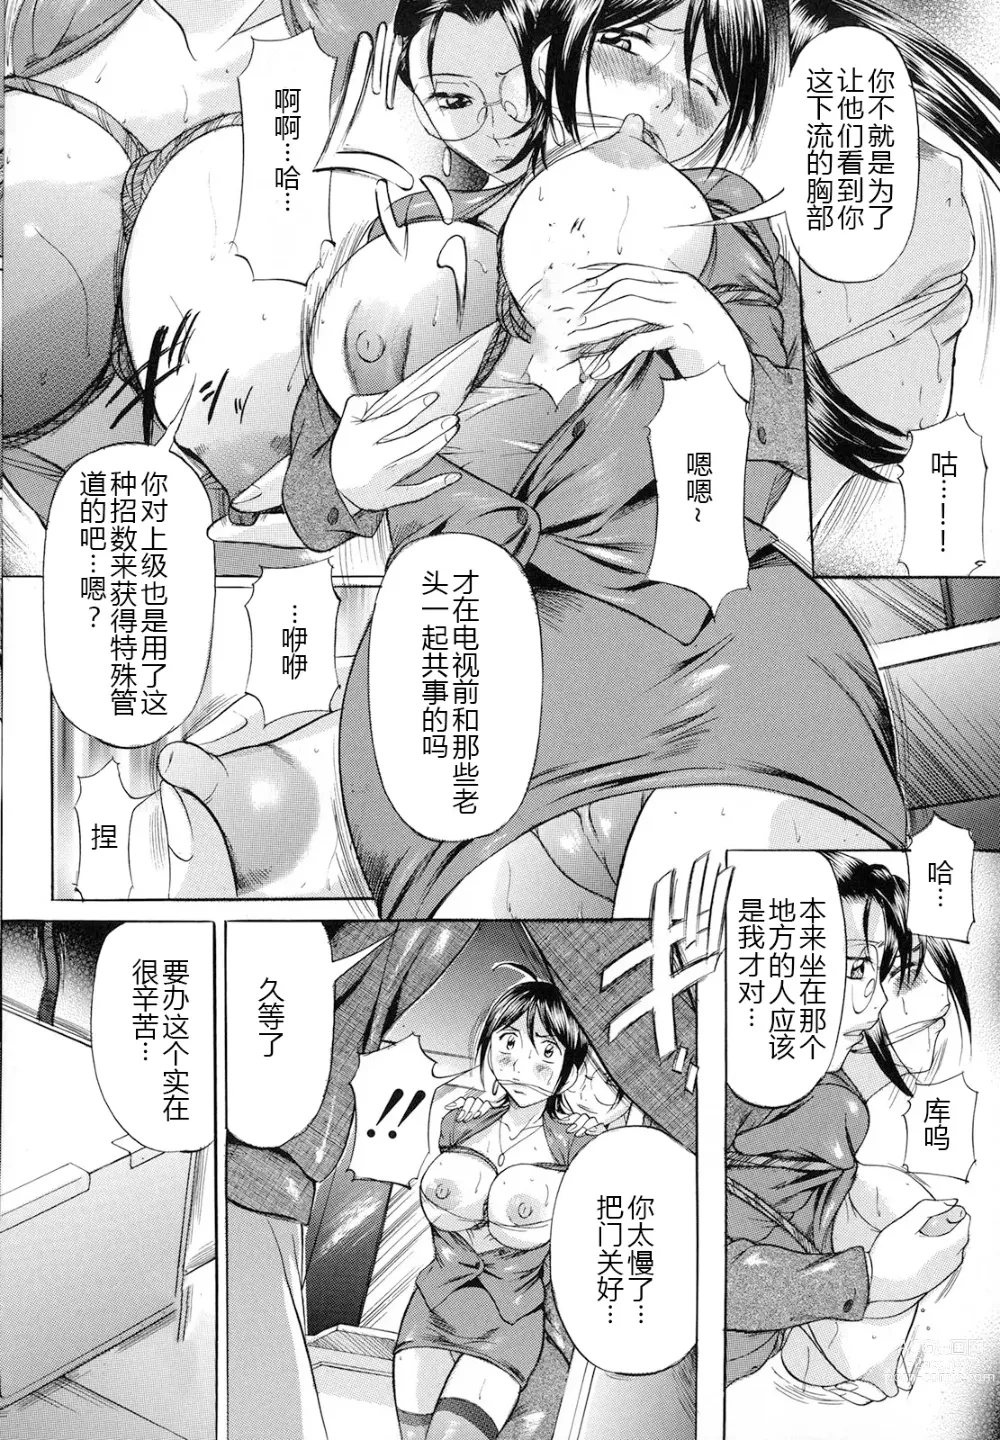 Page 199 of manga Shibarare Tsuma - Tied Up Wife